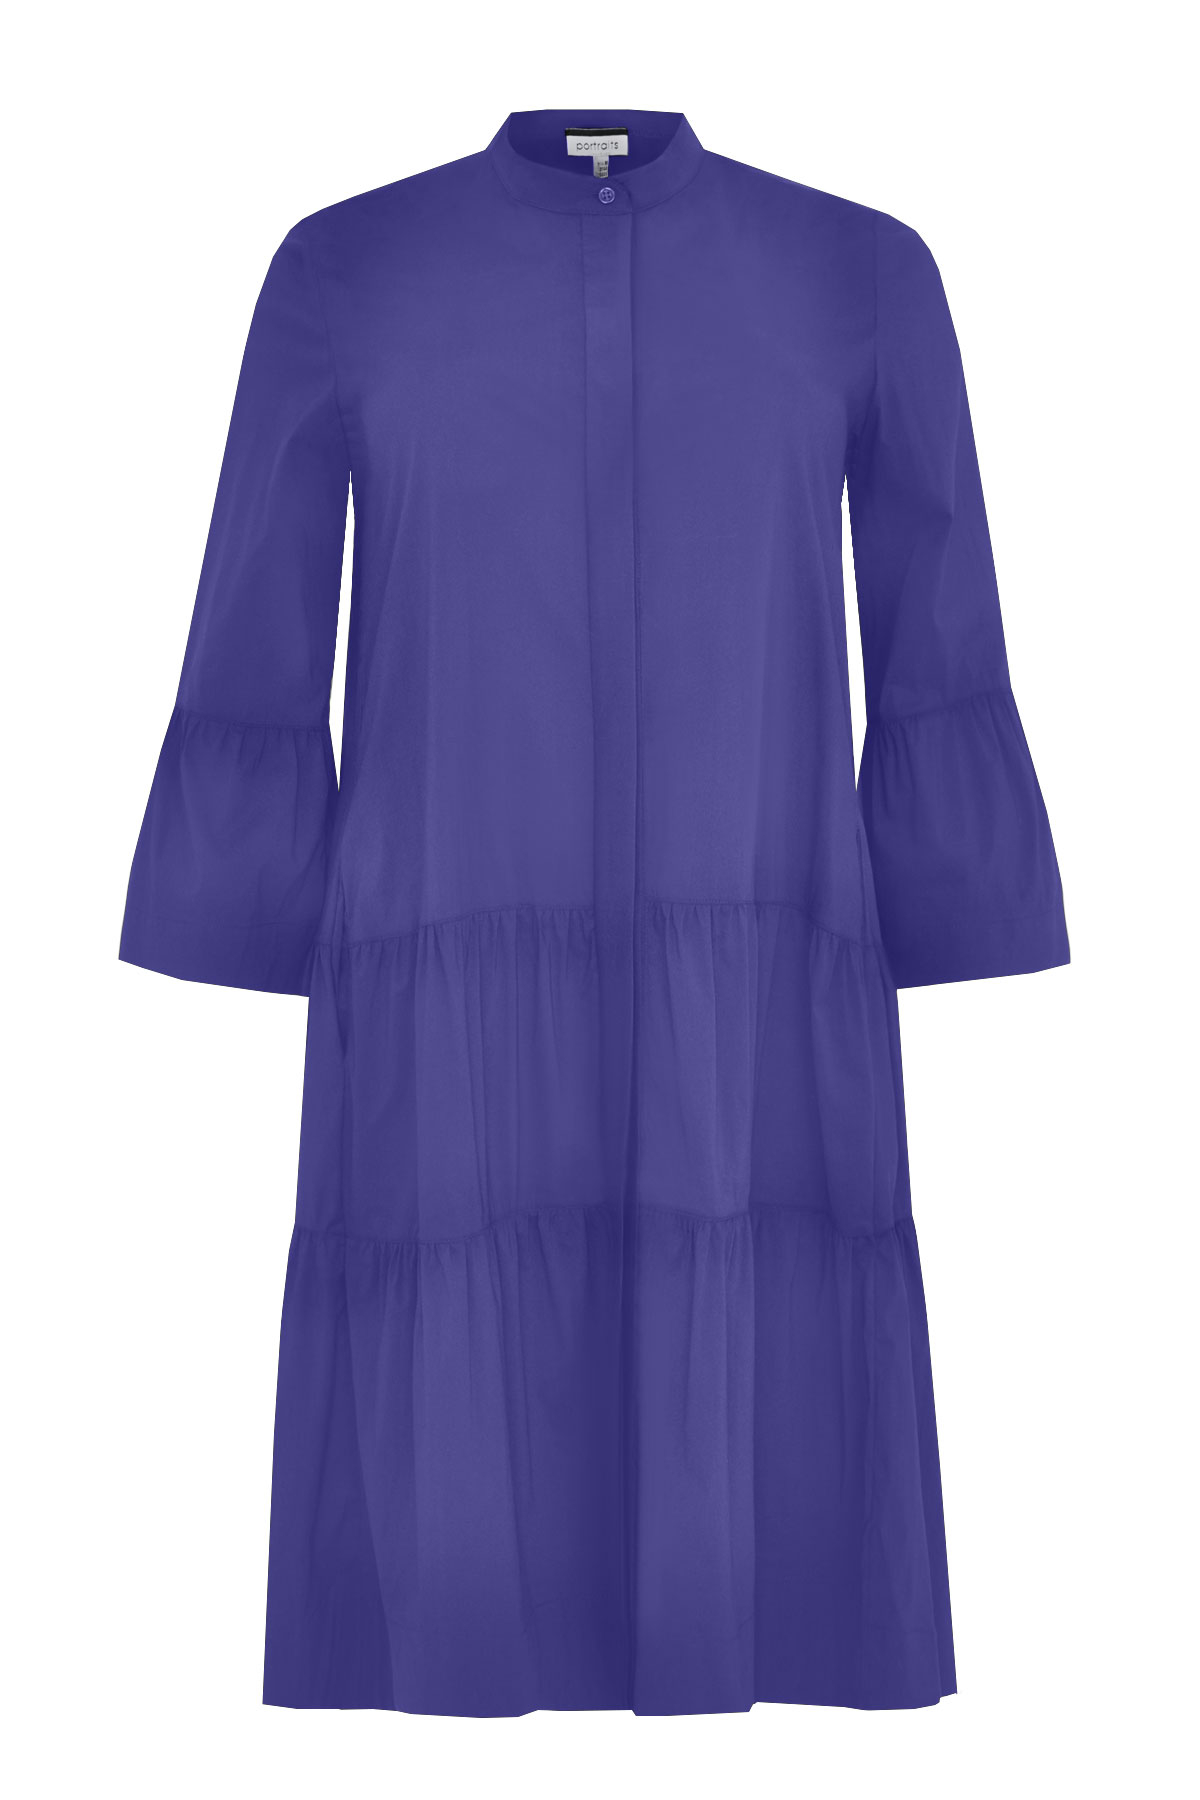 Dress frilled - purple 